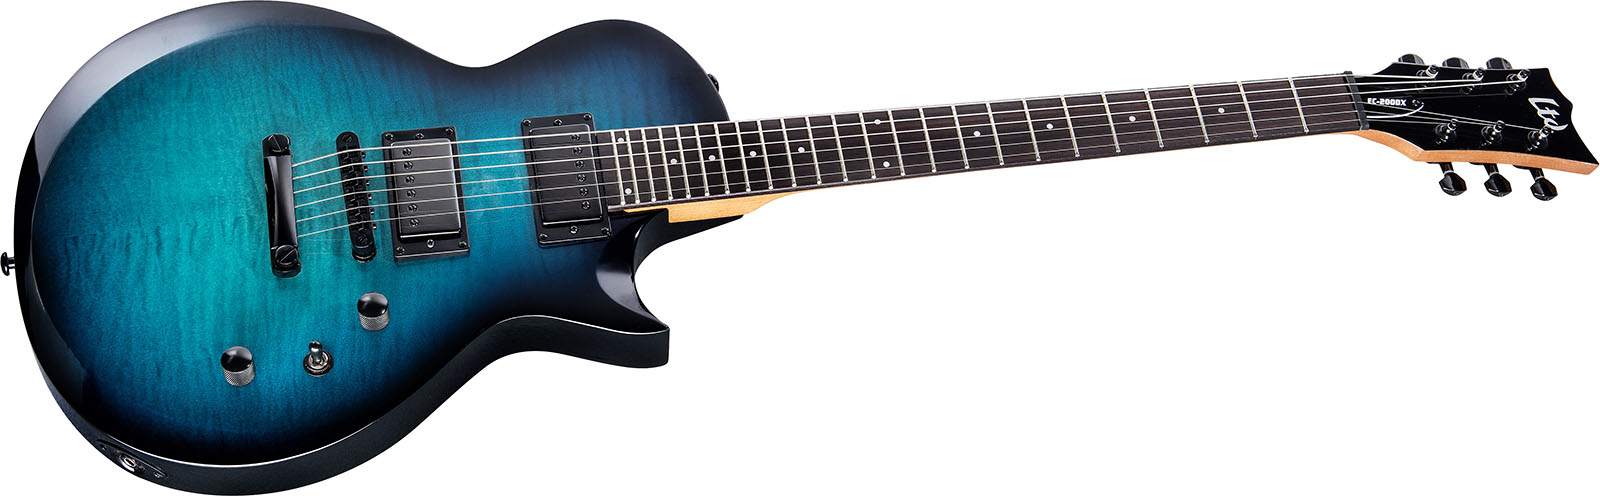 Ltd Ec200dx 2h Ht Rw - Blue Burst - Enkel gesneden elektrische gitaar - Variation 2